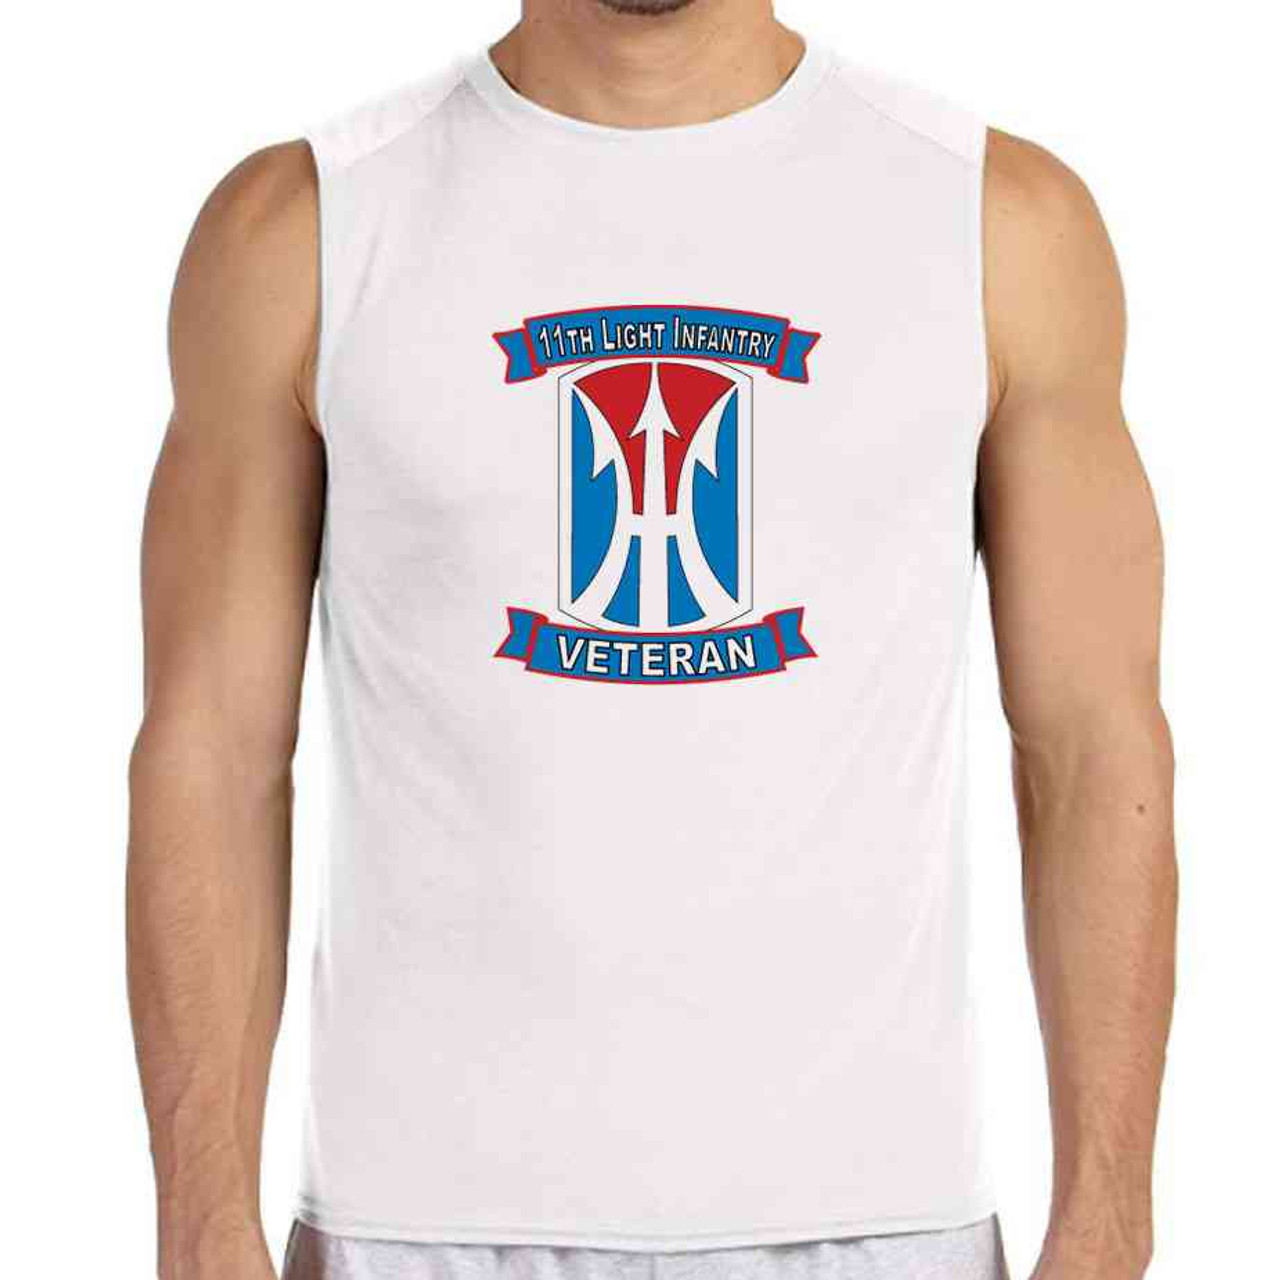 11th light infantry brigade veteran white sleeveless shirt